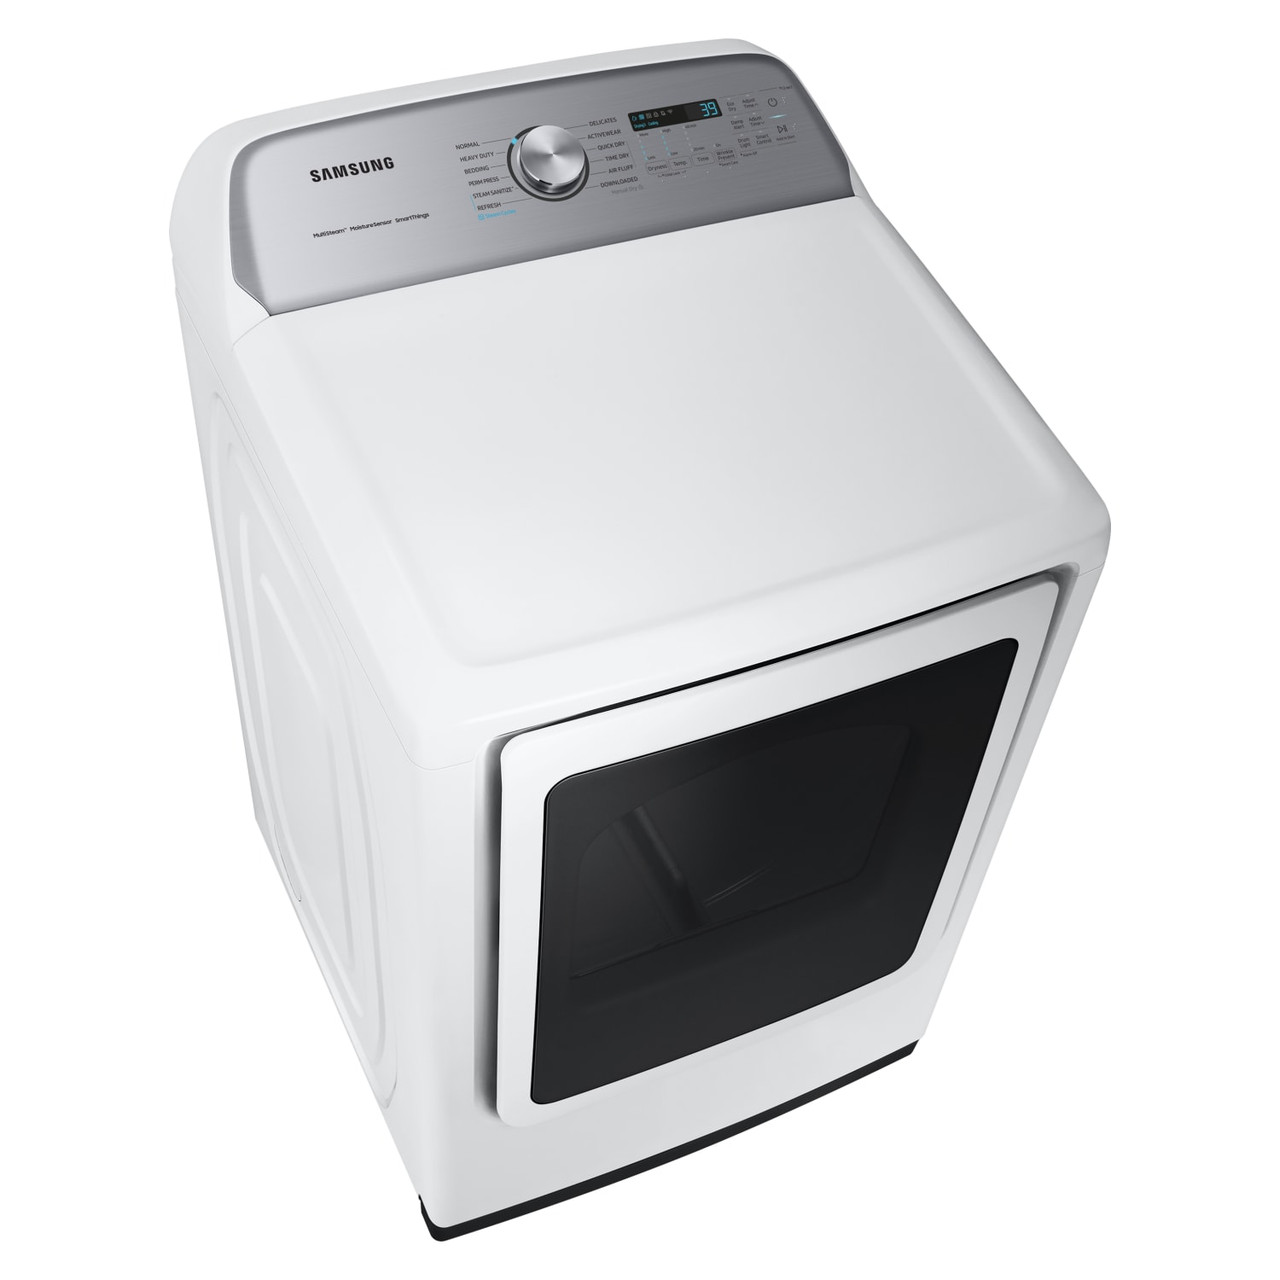 Samsung 7.4 cu. ft. Smart Gas Dryer with Steam Sanitize+ - DVG52A5500W